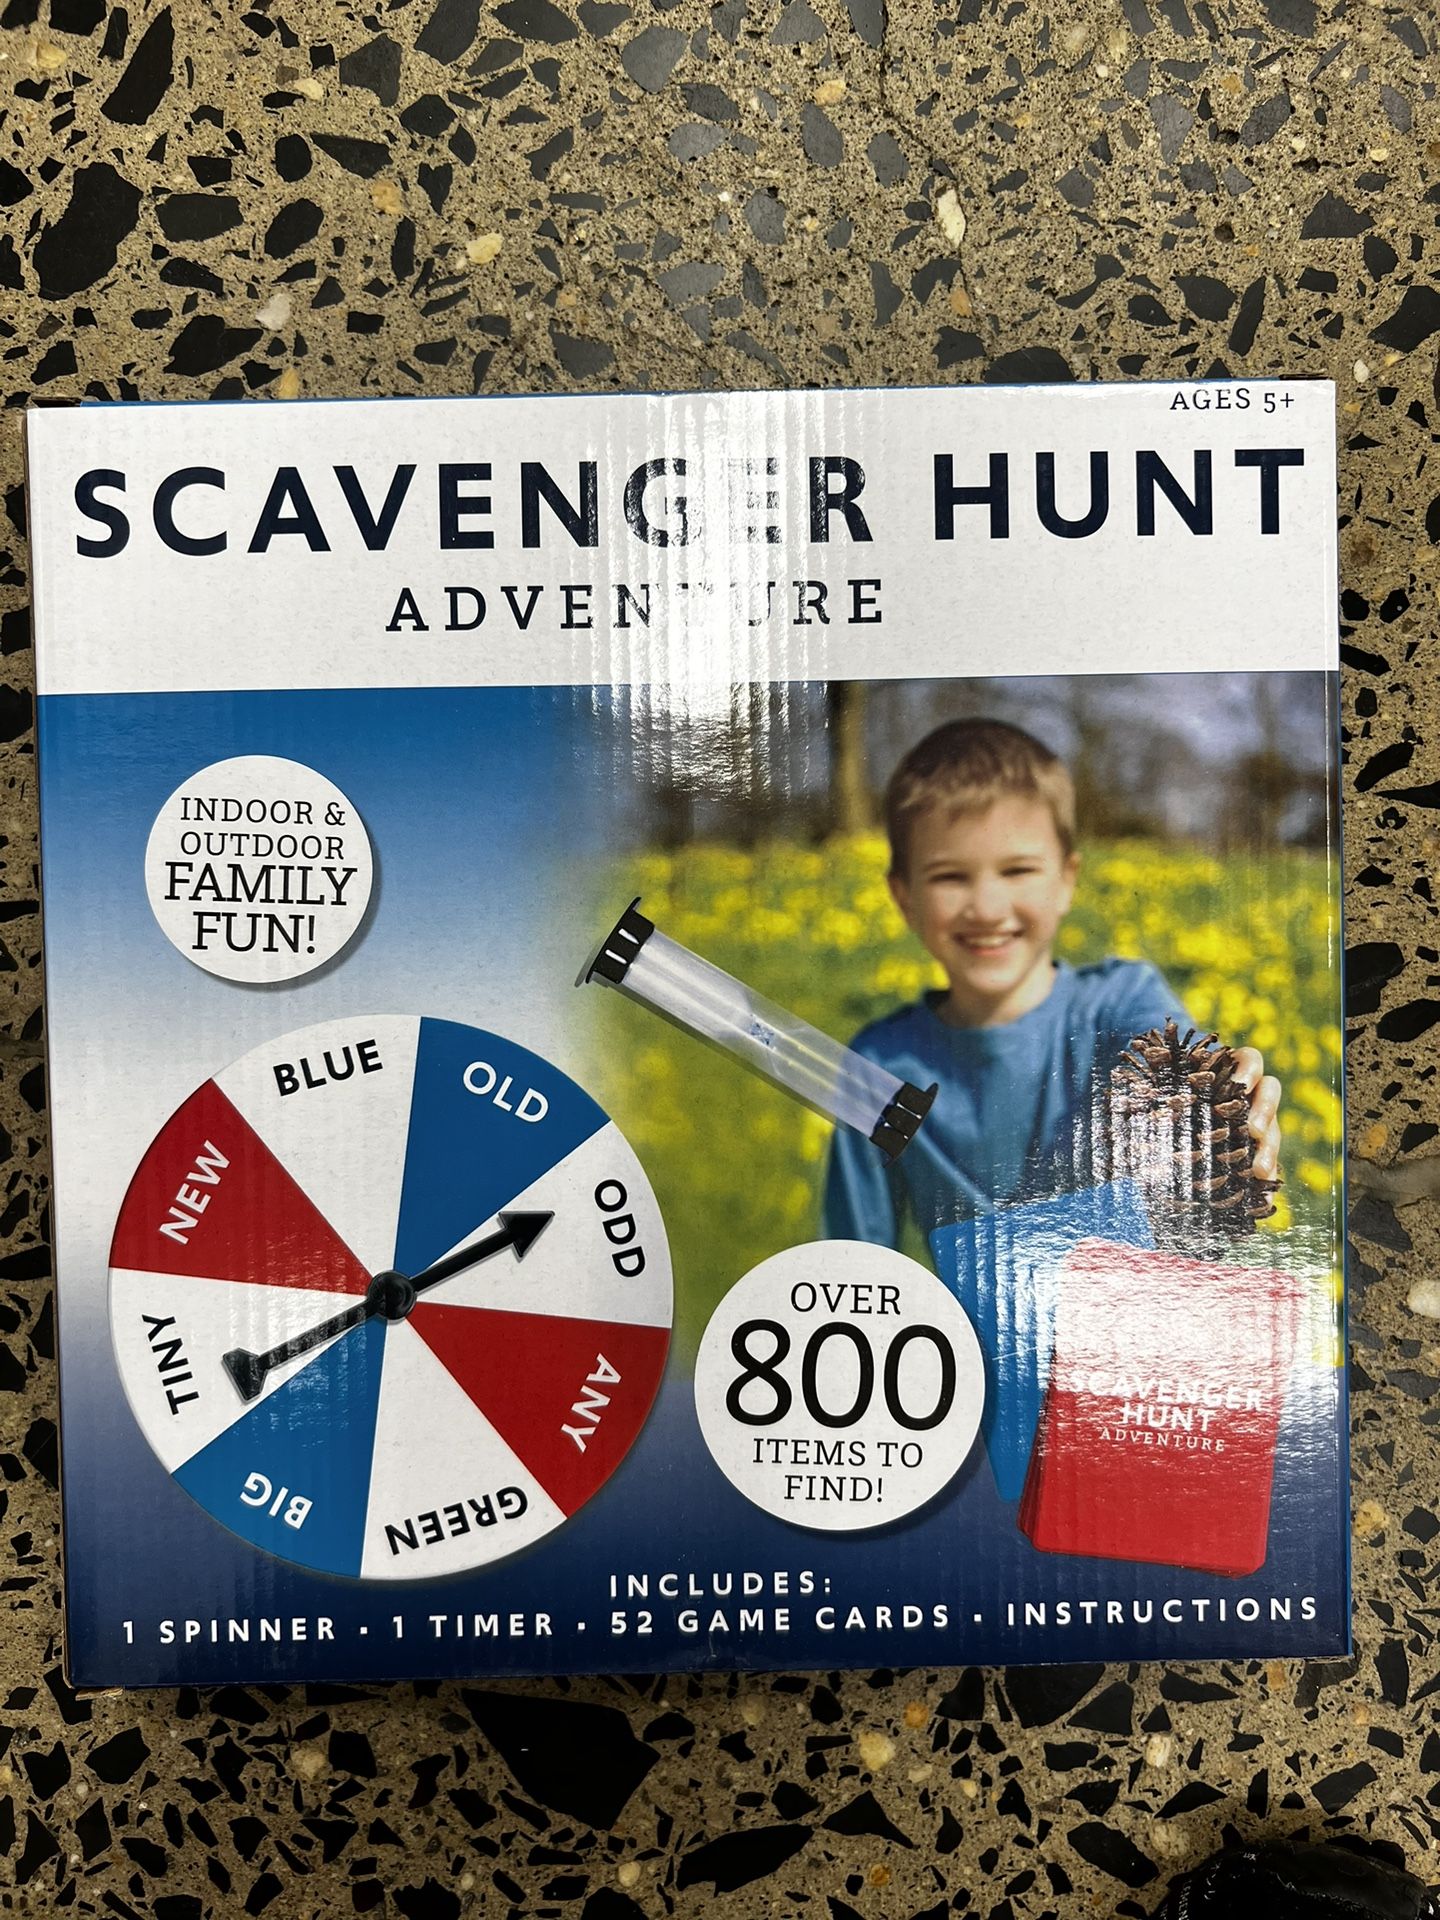 Scavenger Hunt For Kids